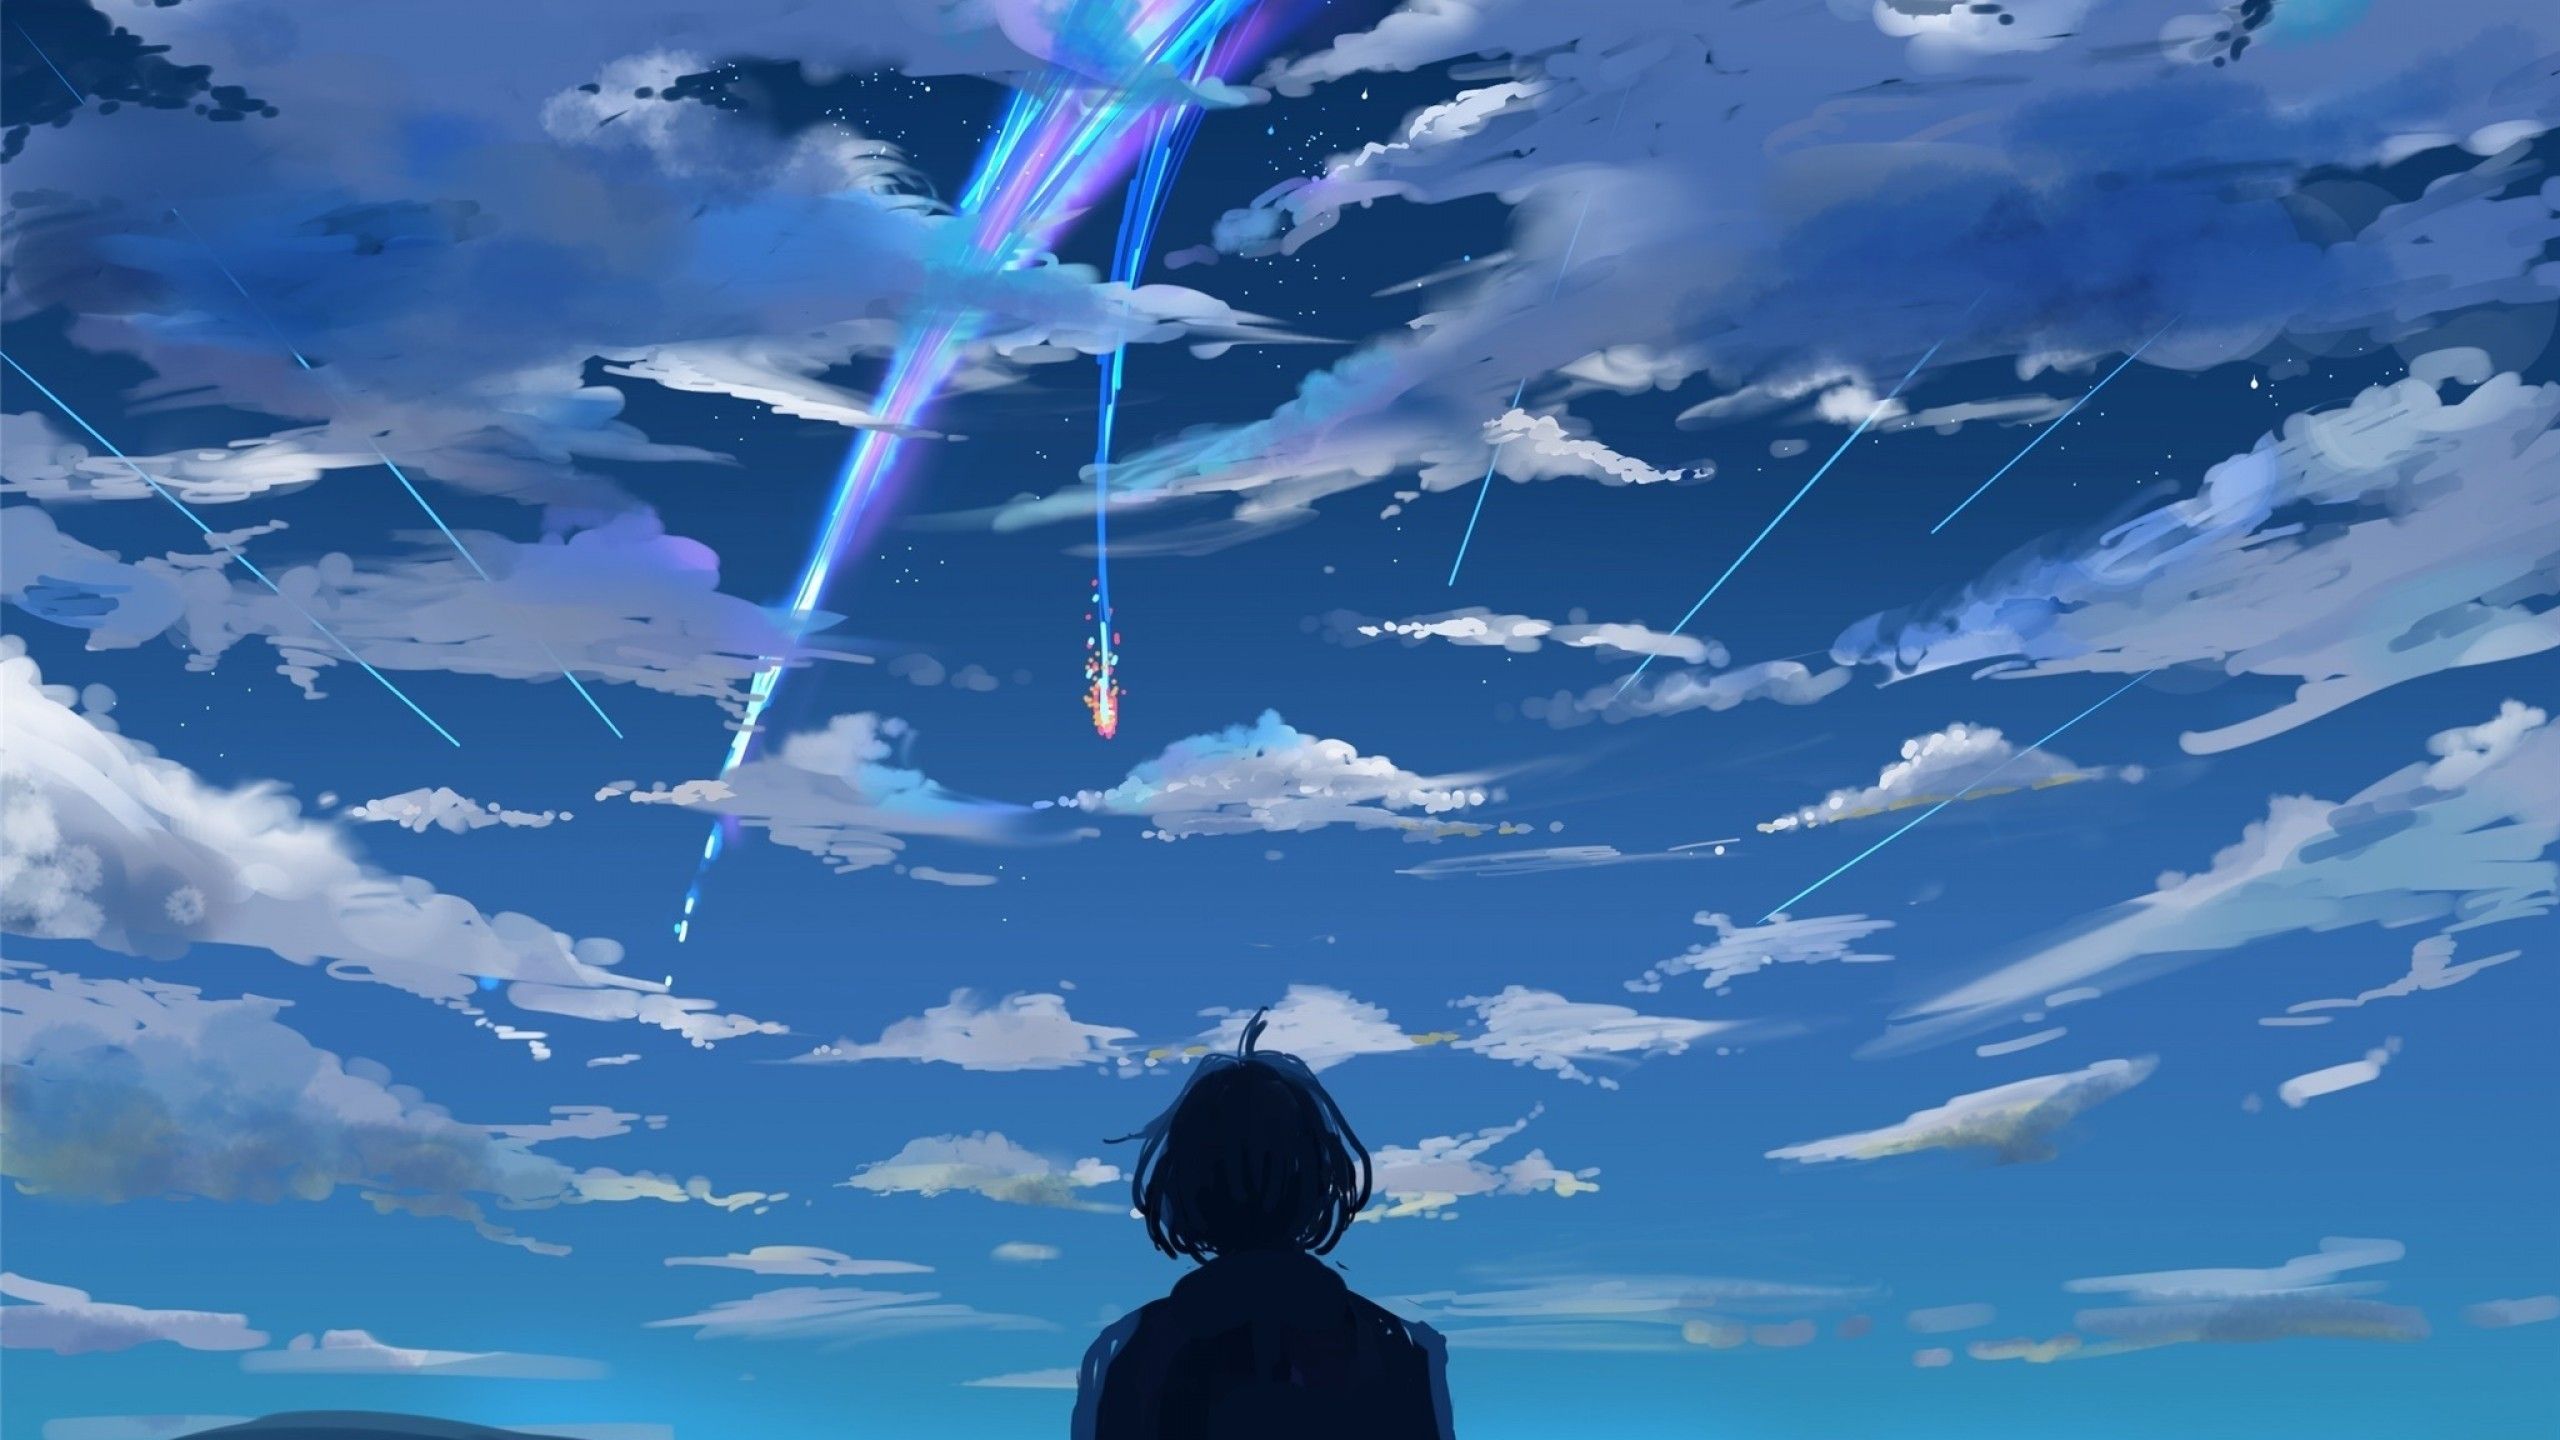 Anime Cloud Wallpaper